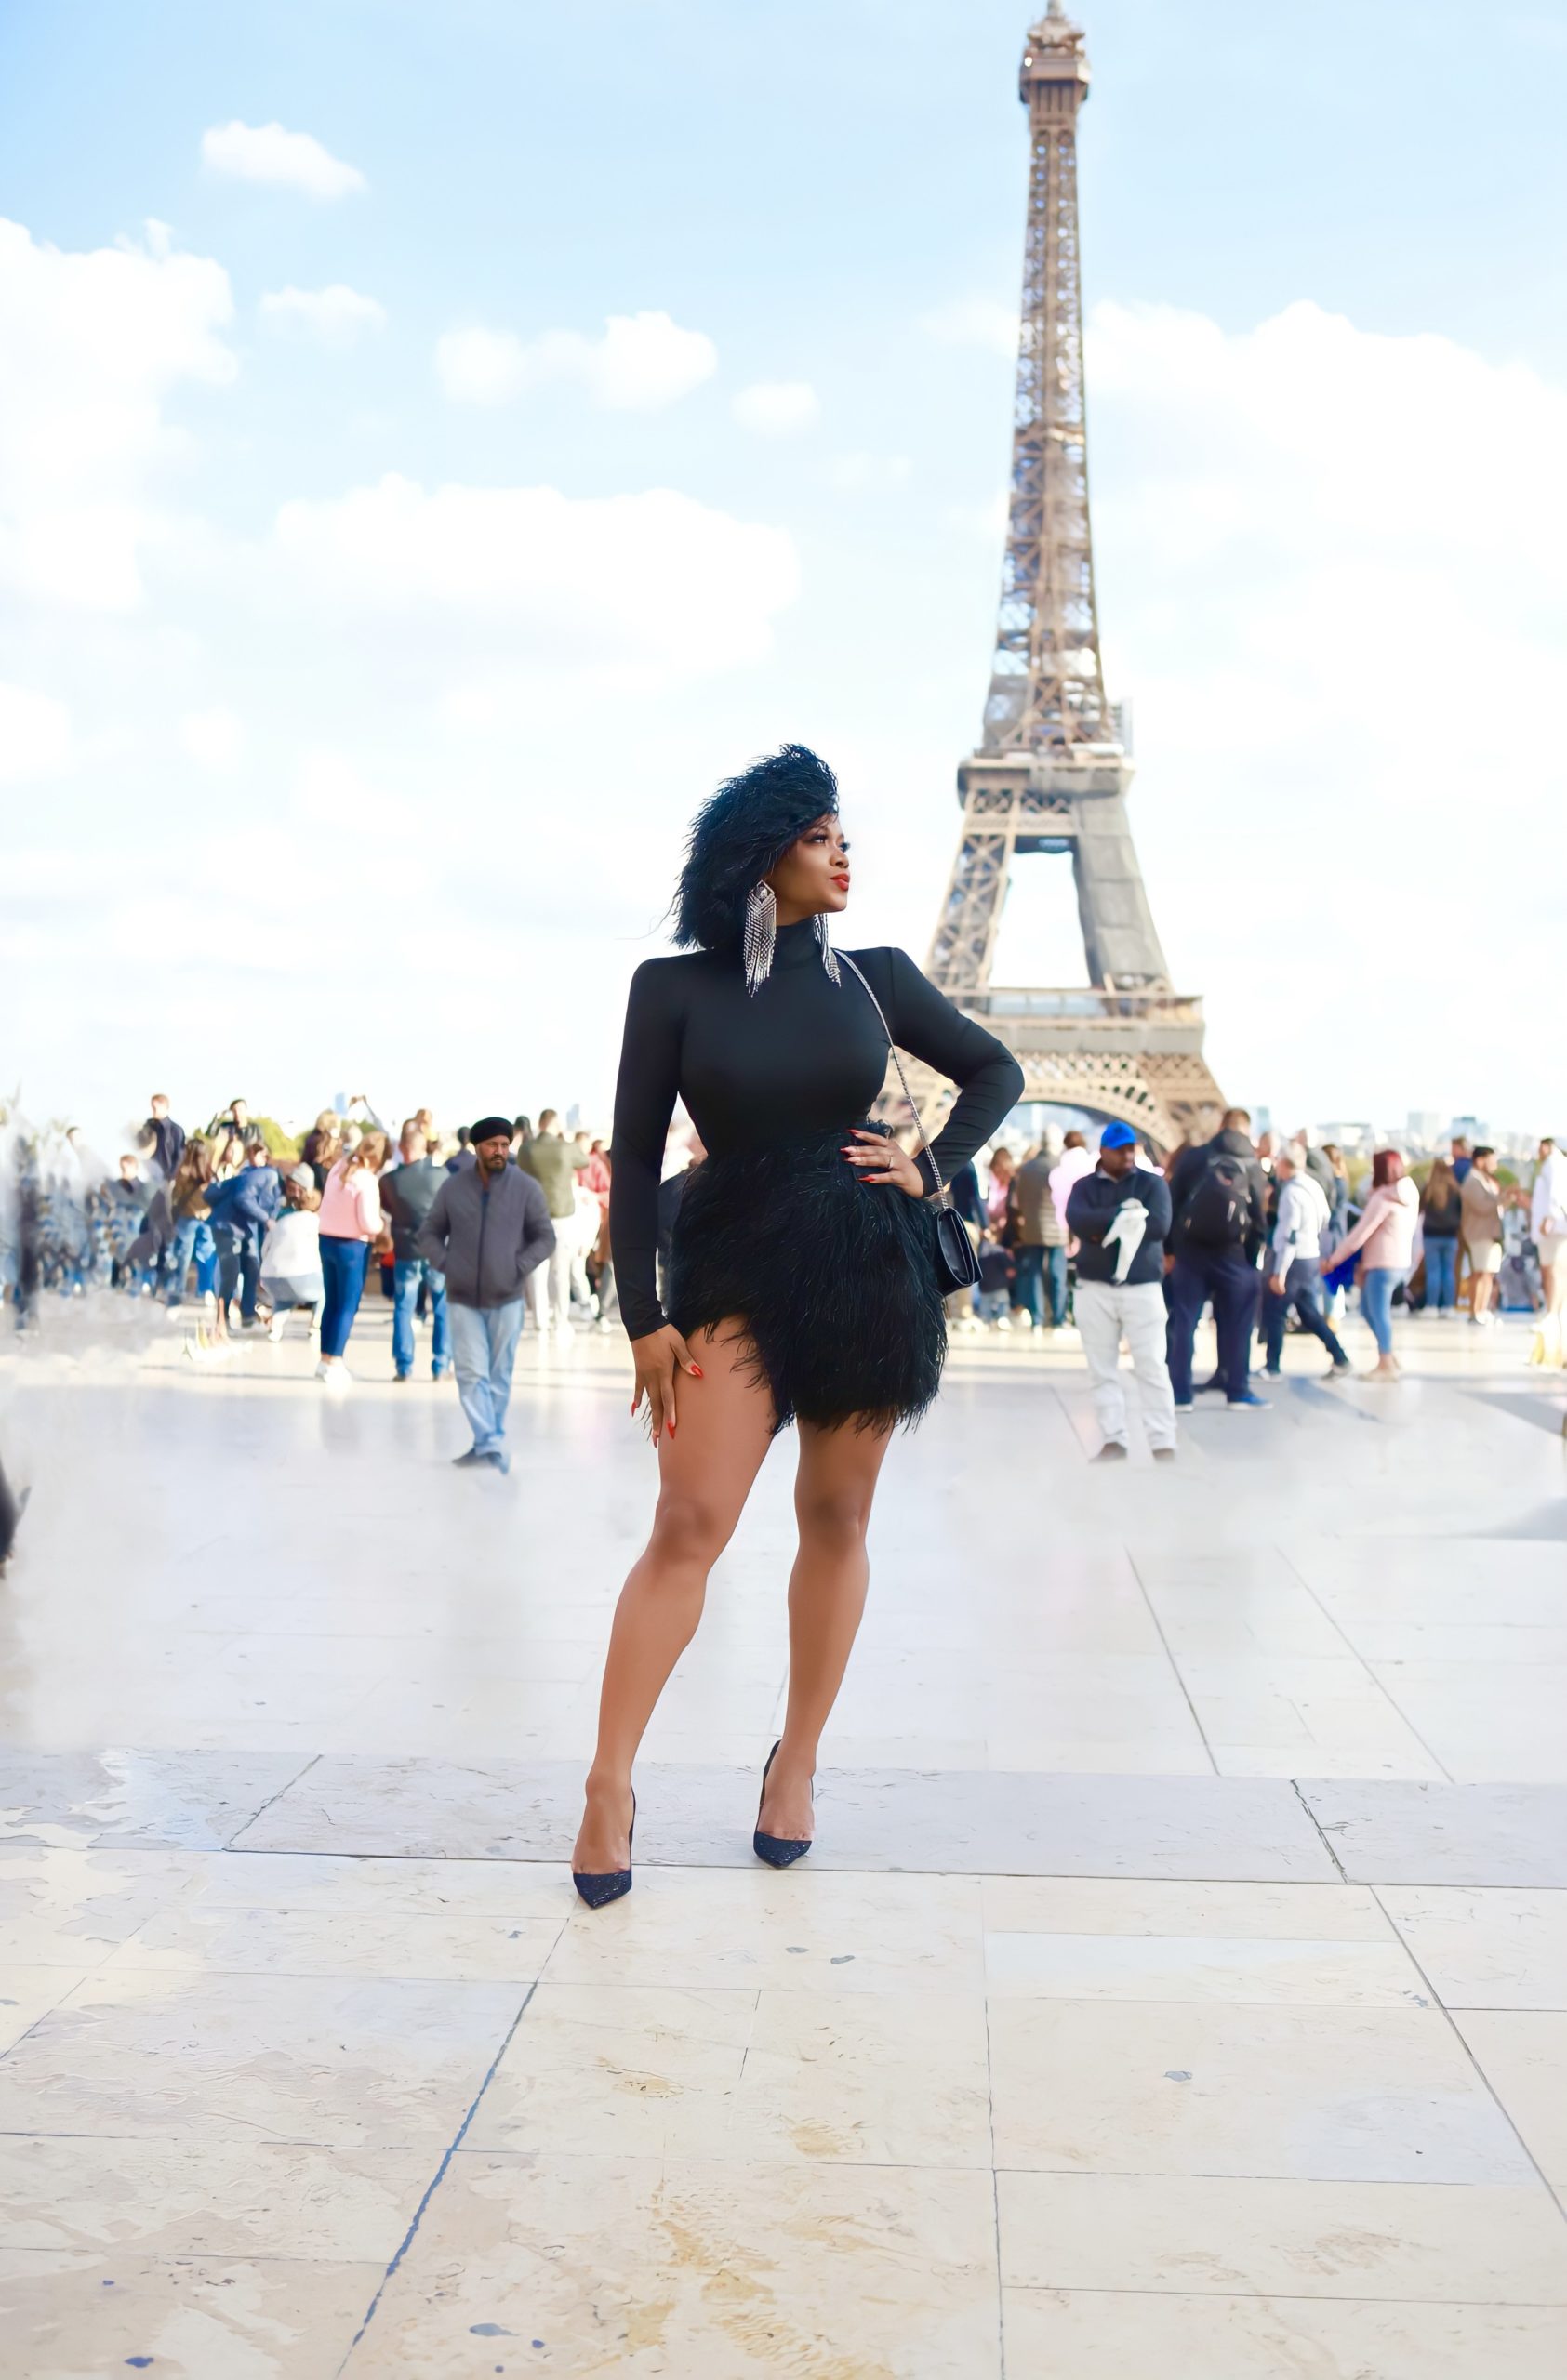 Paris Fashion: Where Green Is the New Black